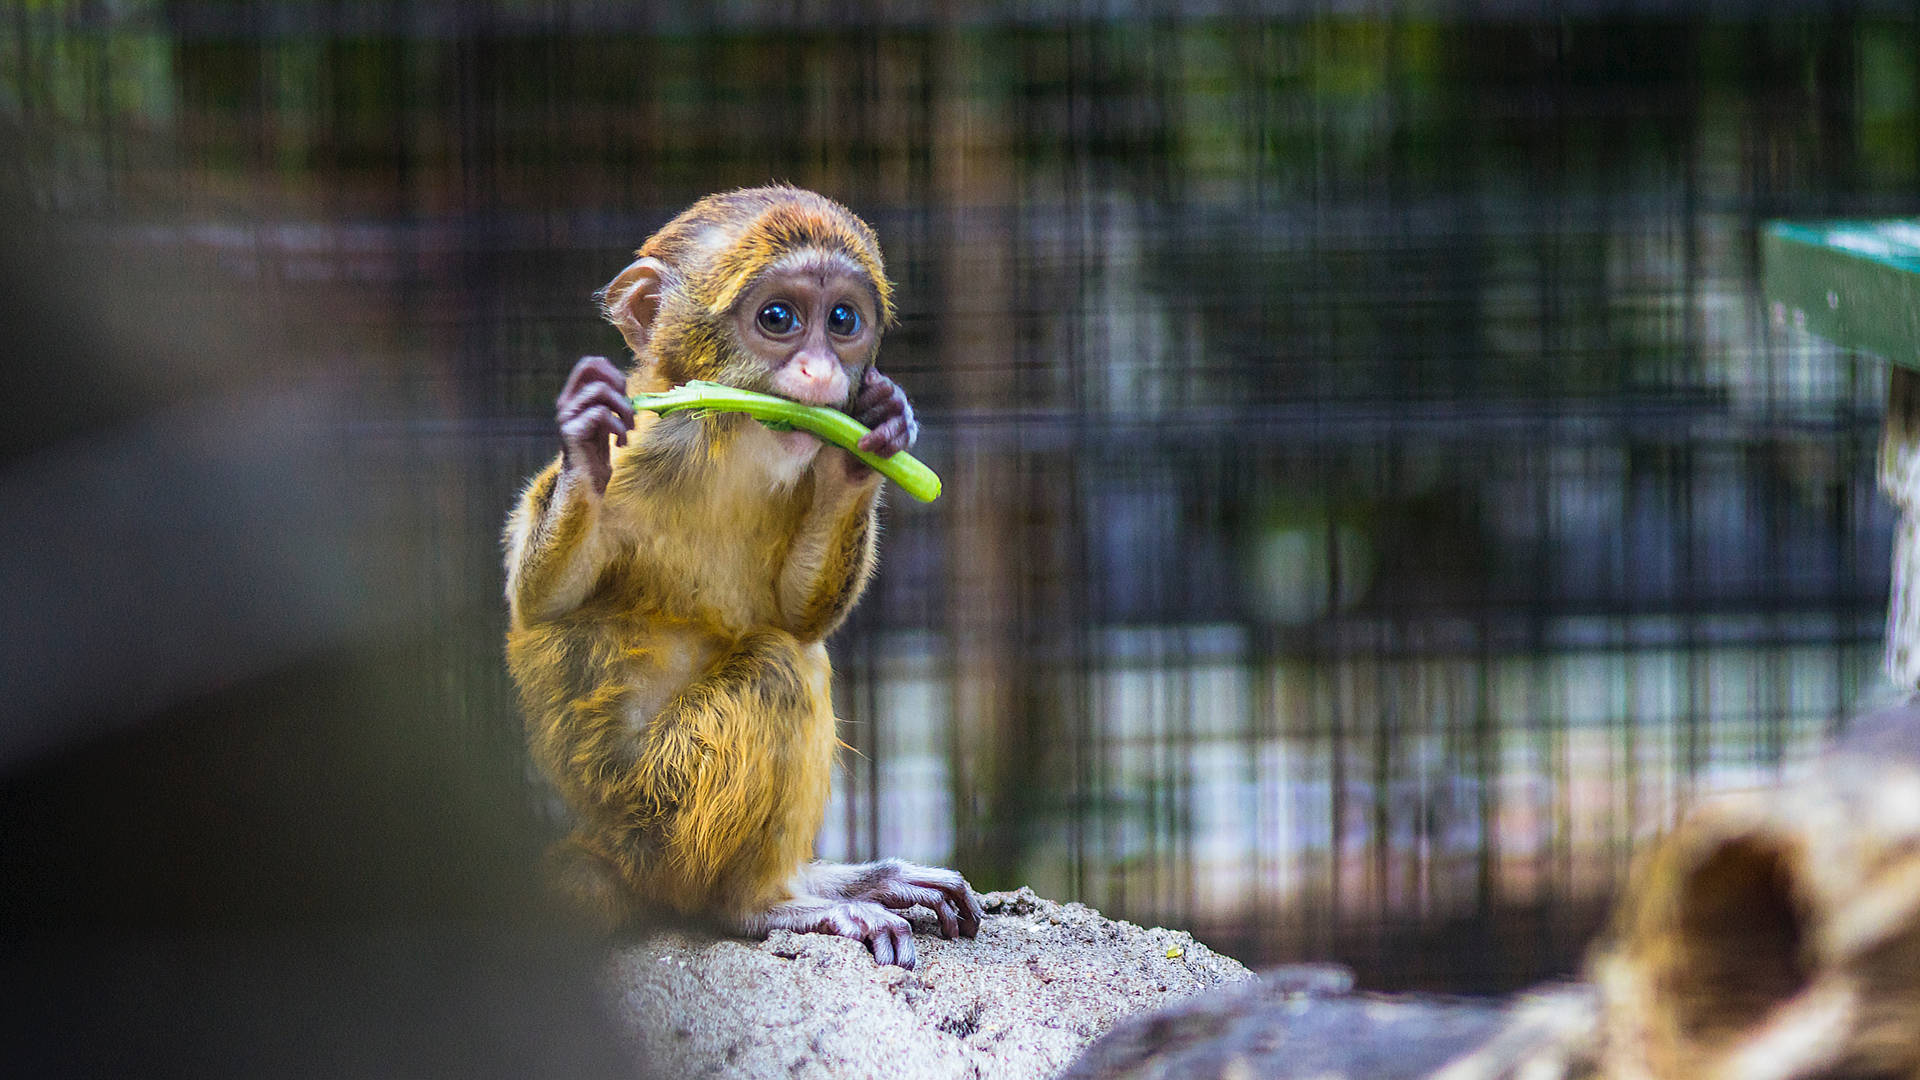 Cute Animal Monkey Infant Eating Celery Wallpaper